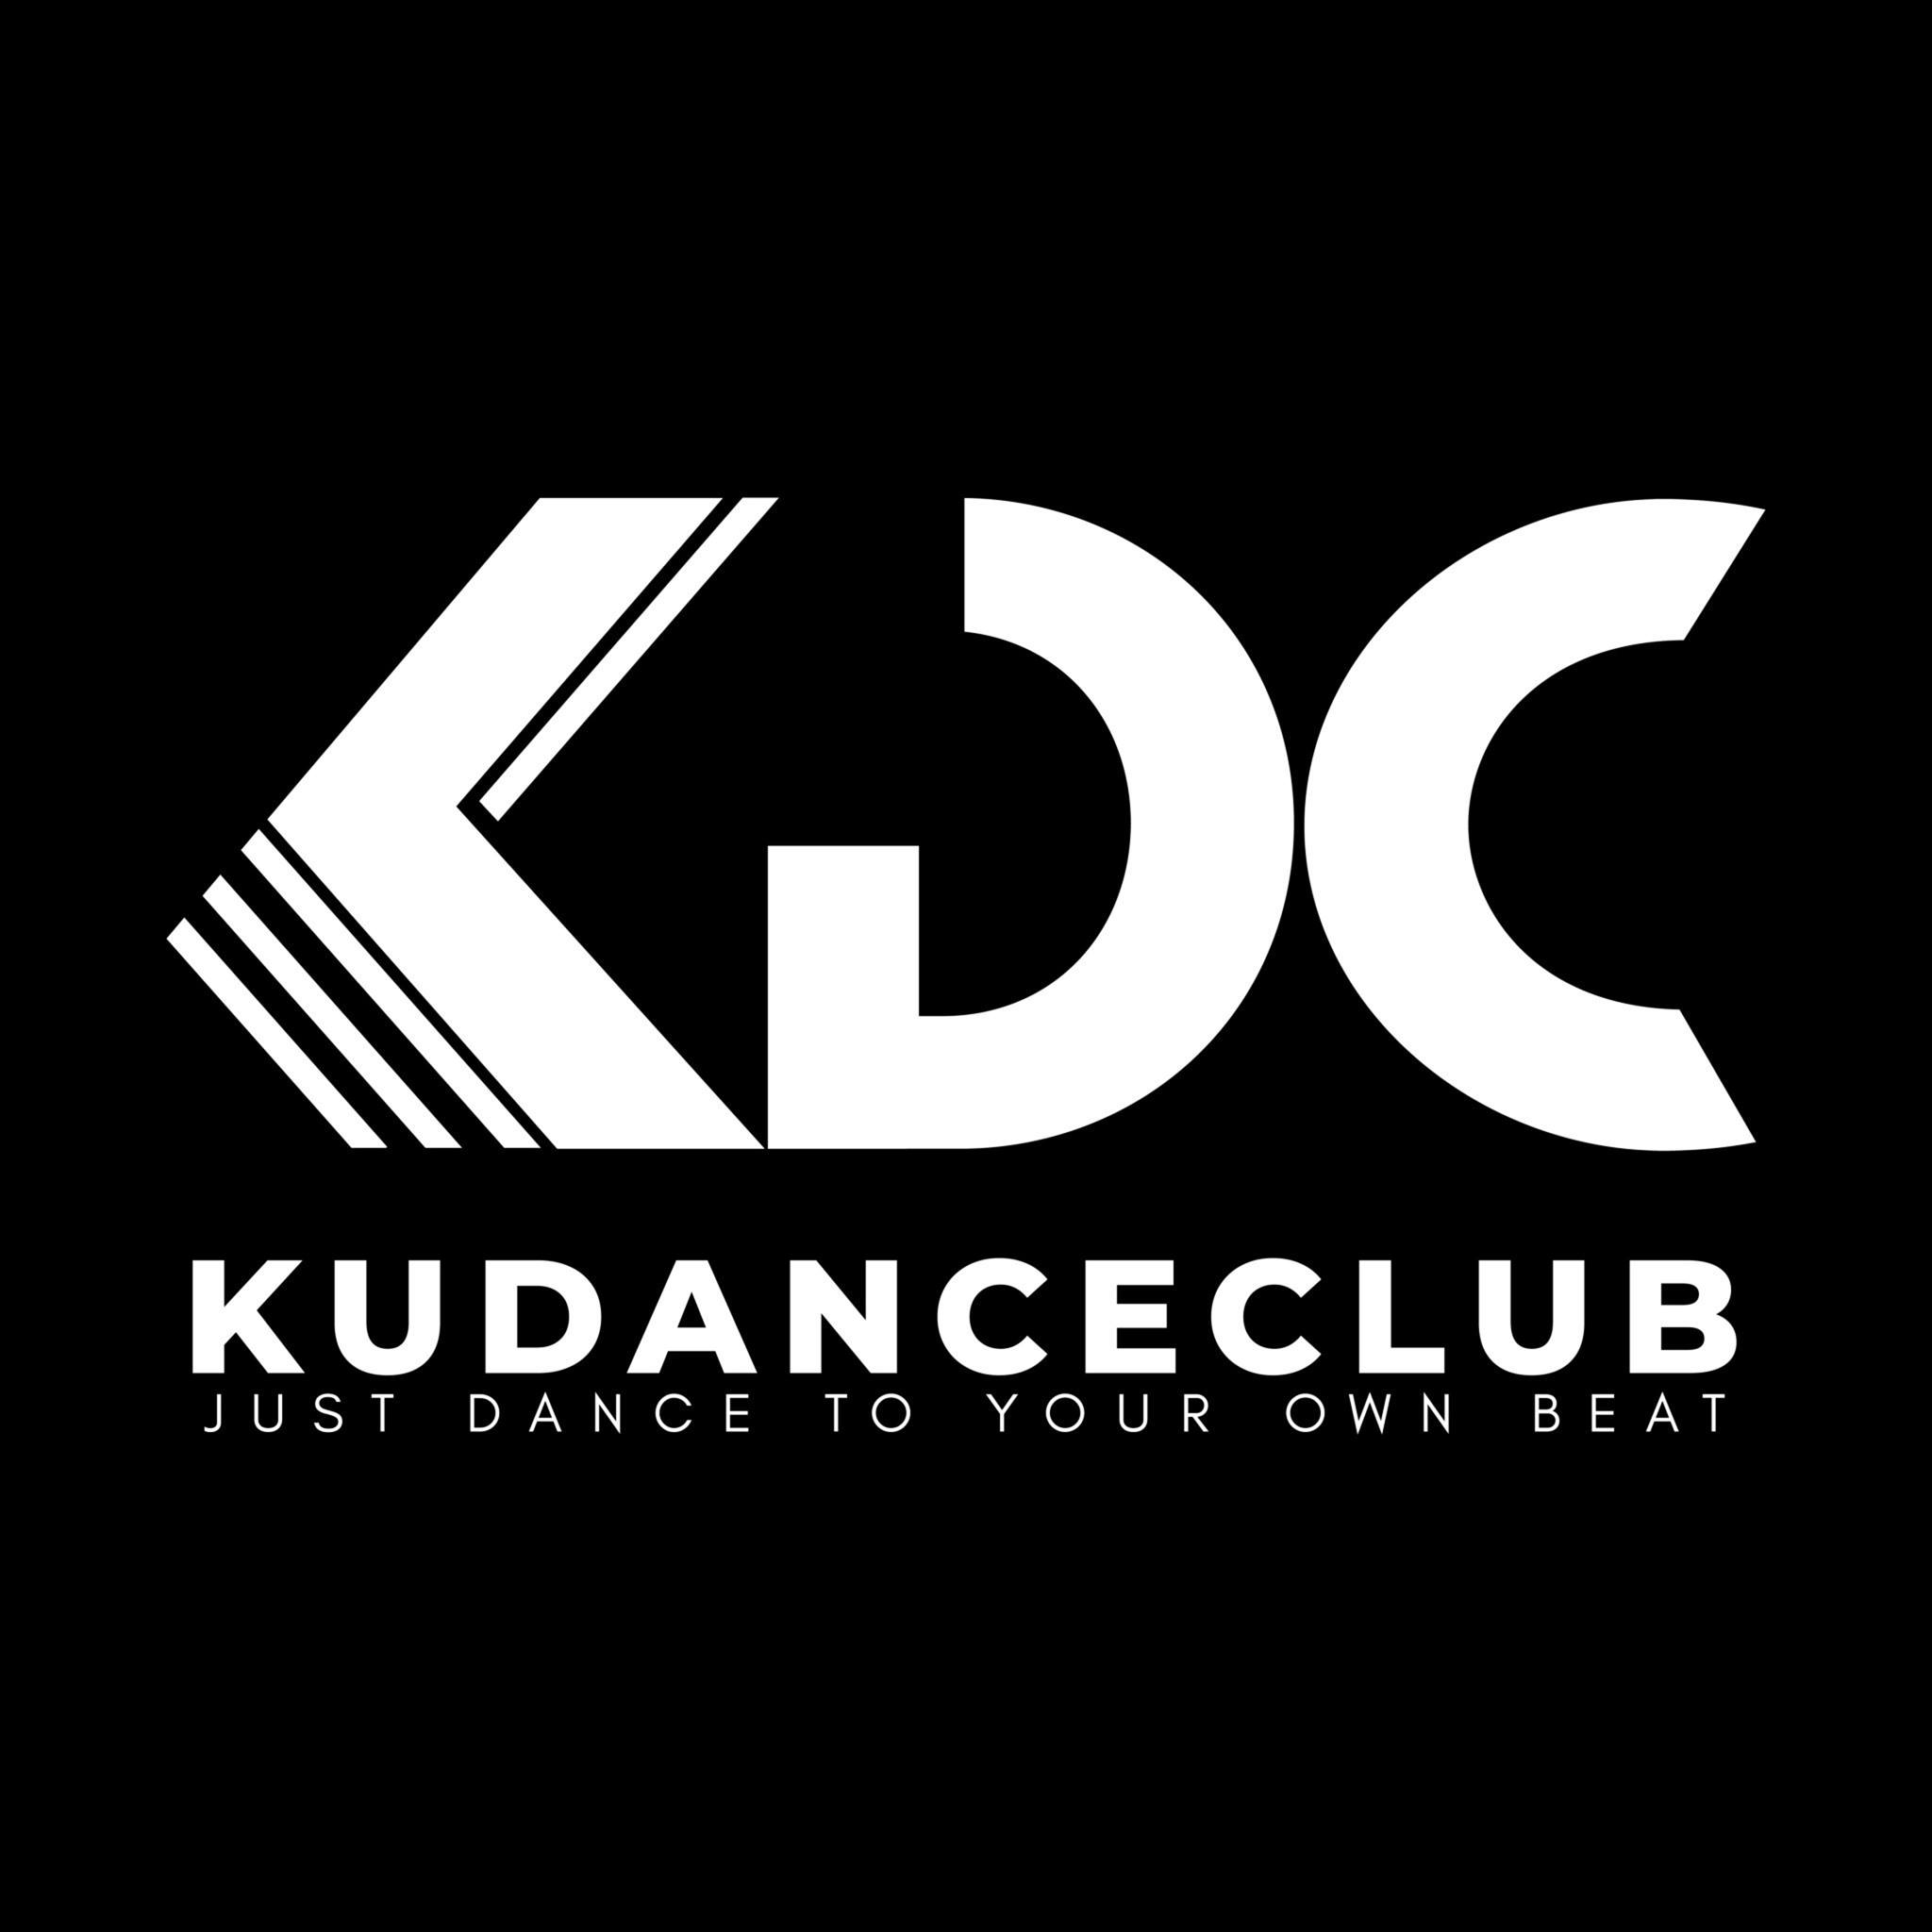 KU dance club : Brand Short Description Type Here.